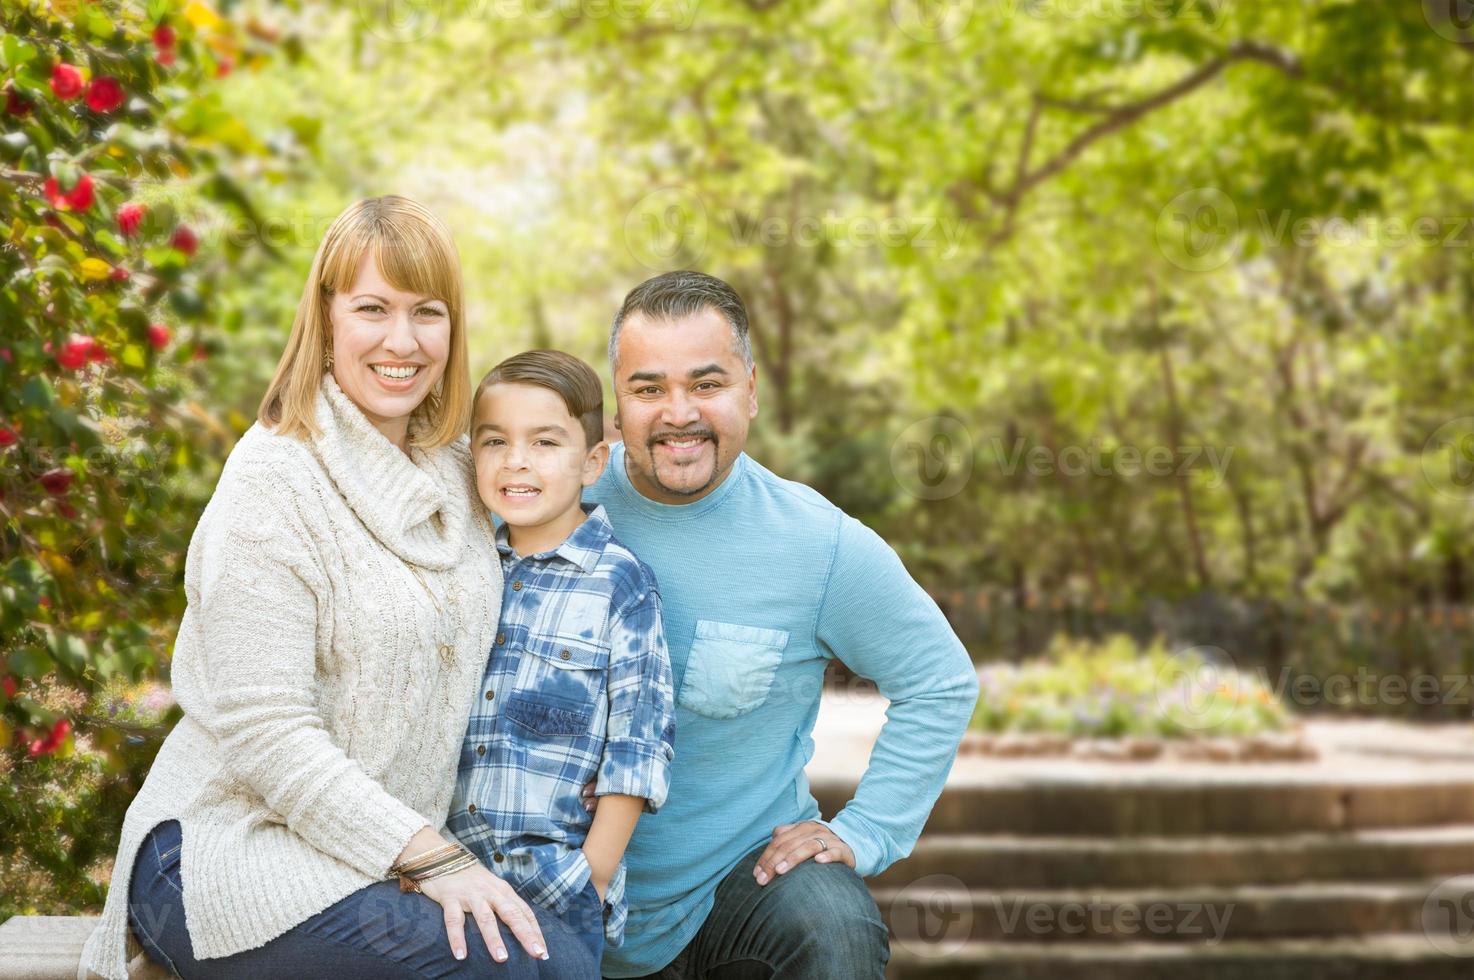 Mixed Race Hispanic and Caucasian Family Portrait at the Park photo